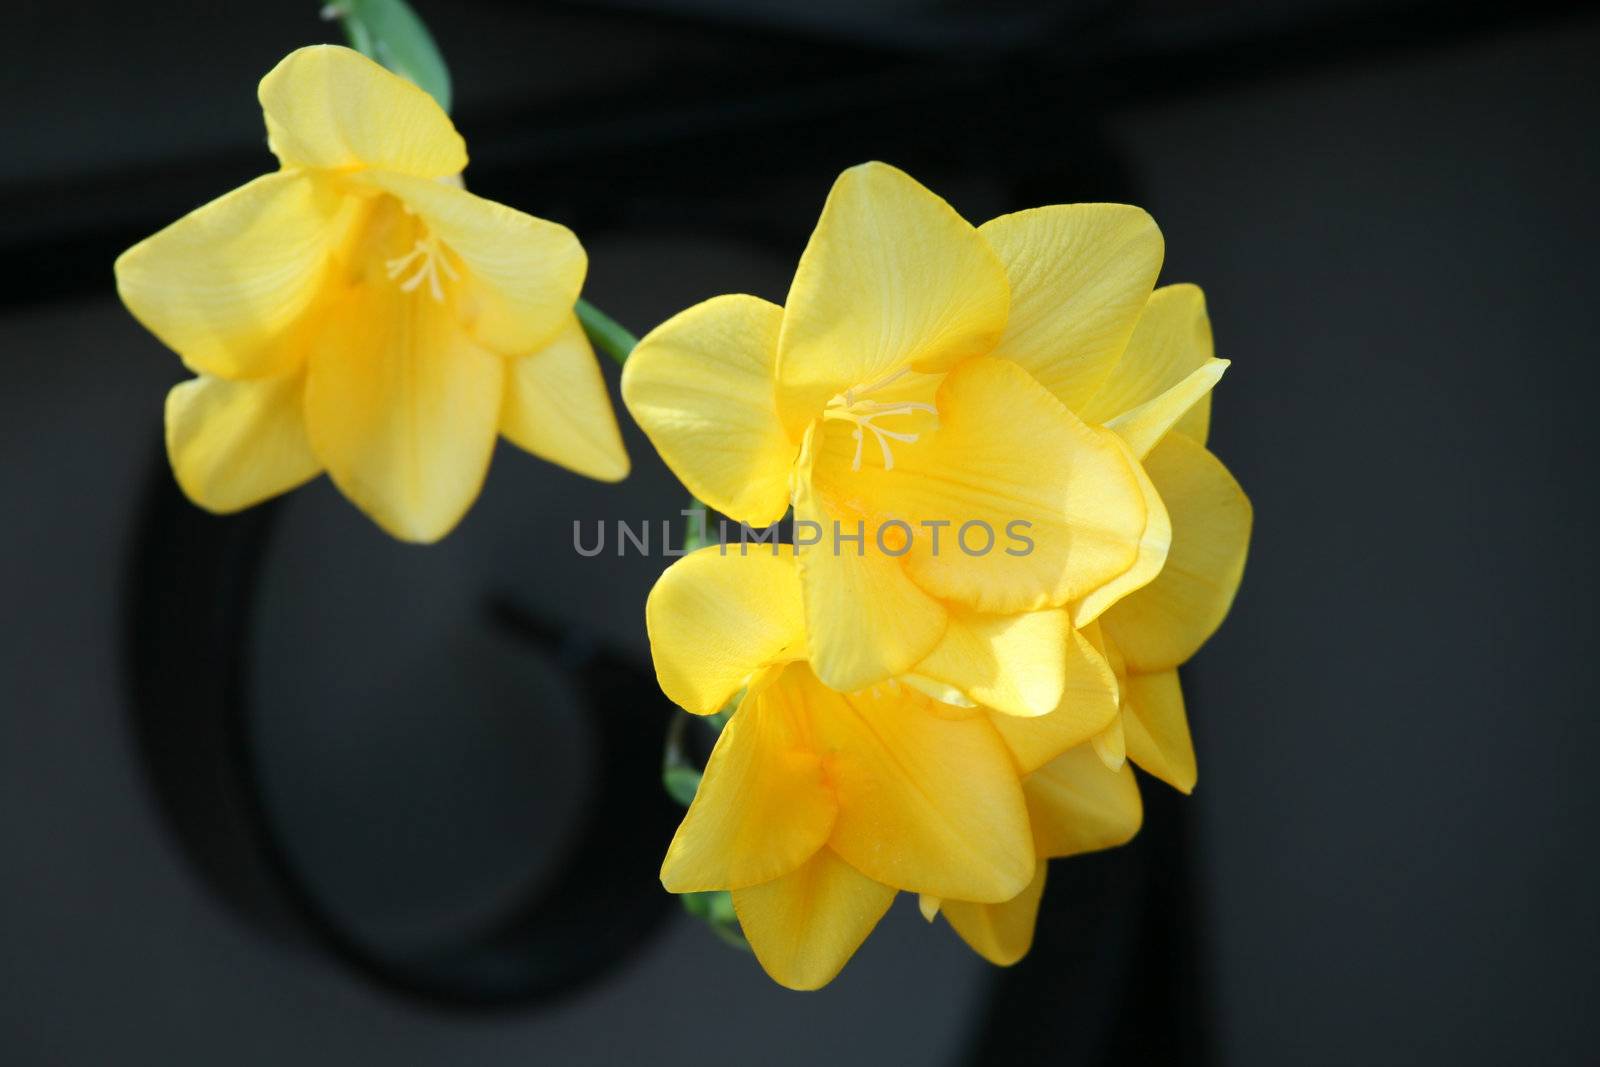 Beautiful yellow daffodils by jarenwicklund